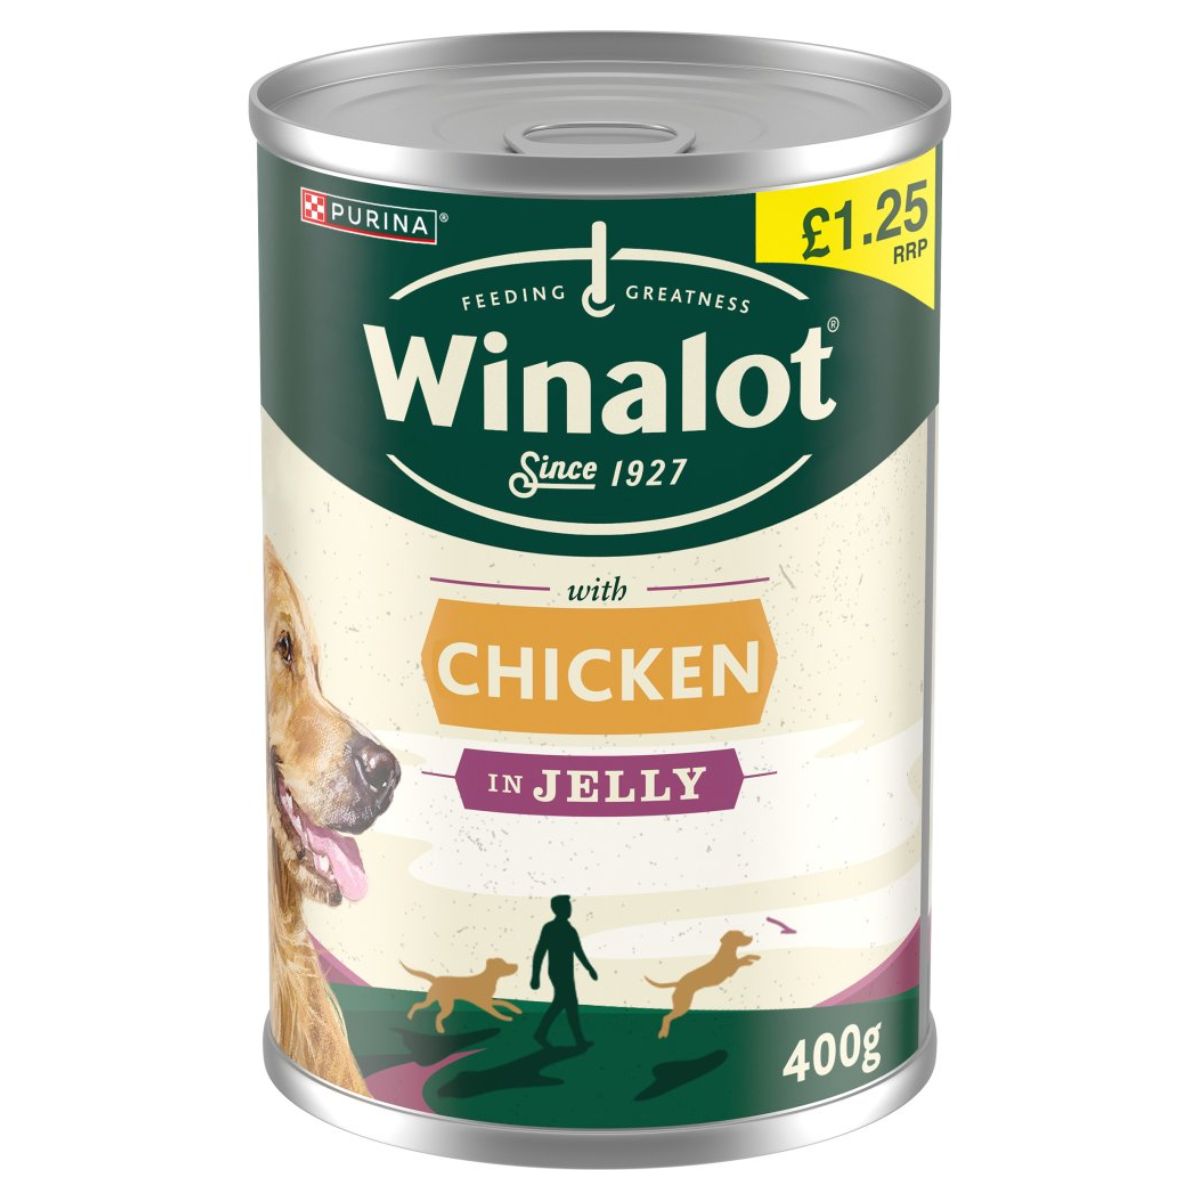 Winalot - Chicken In Jelly - 400g dog food.